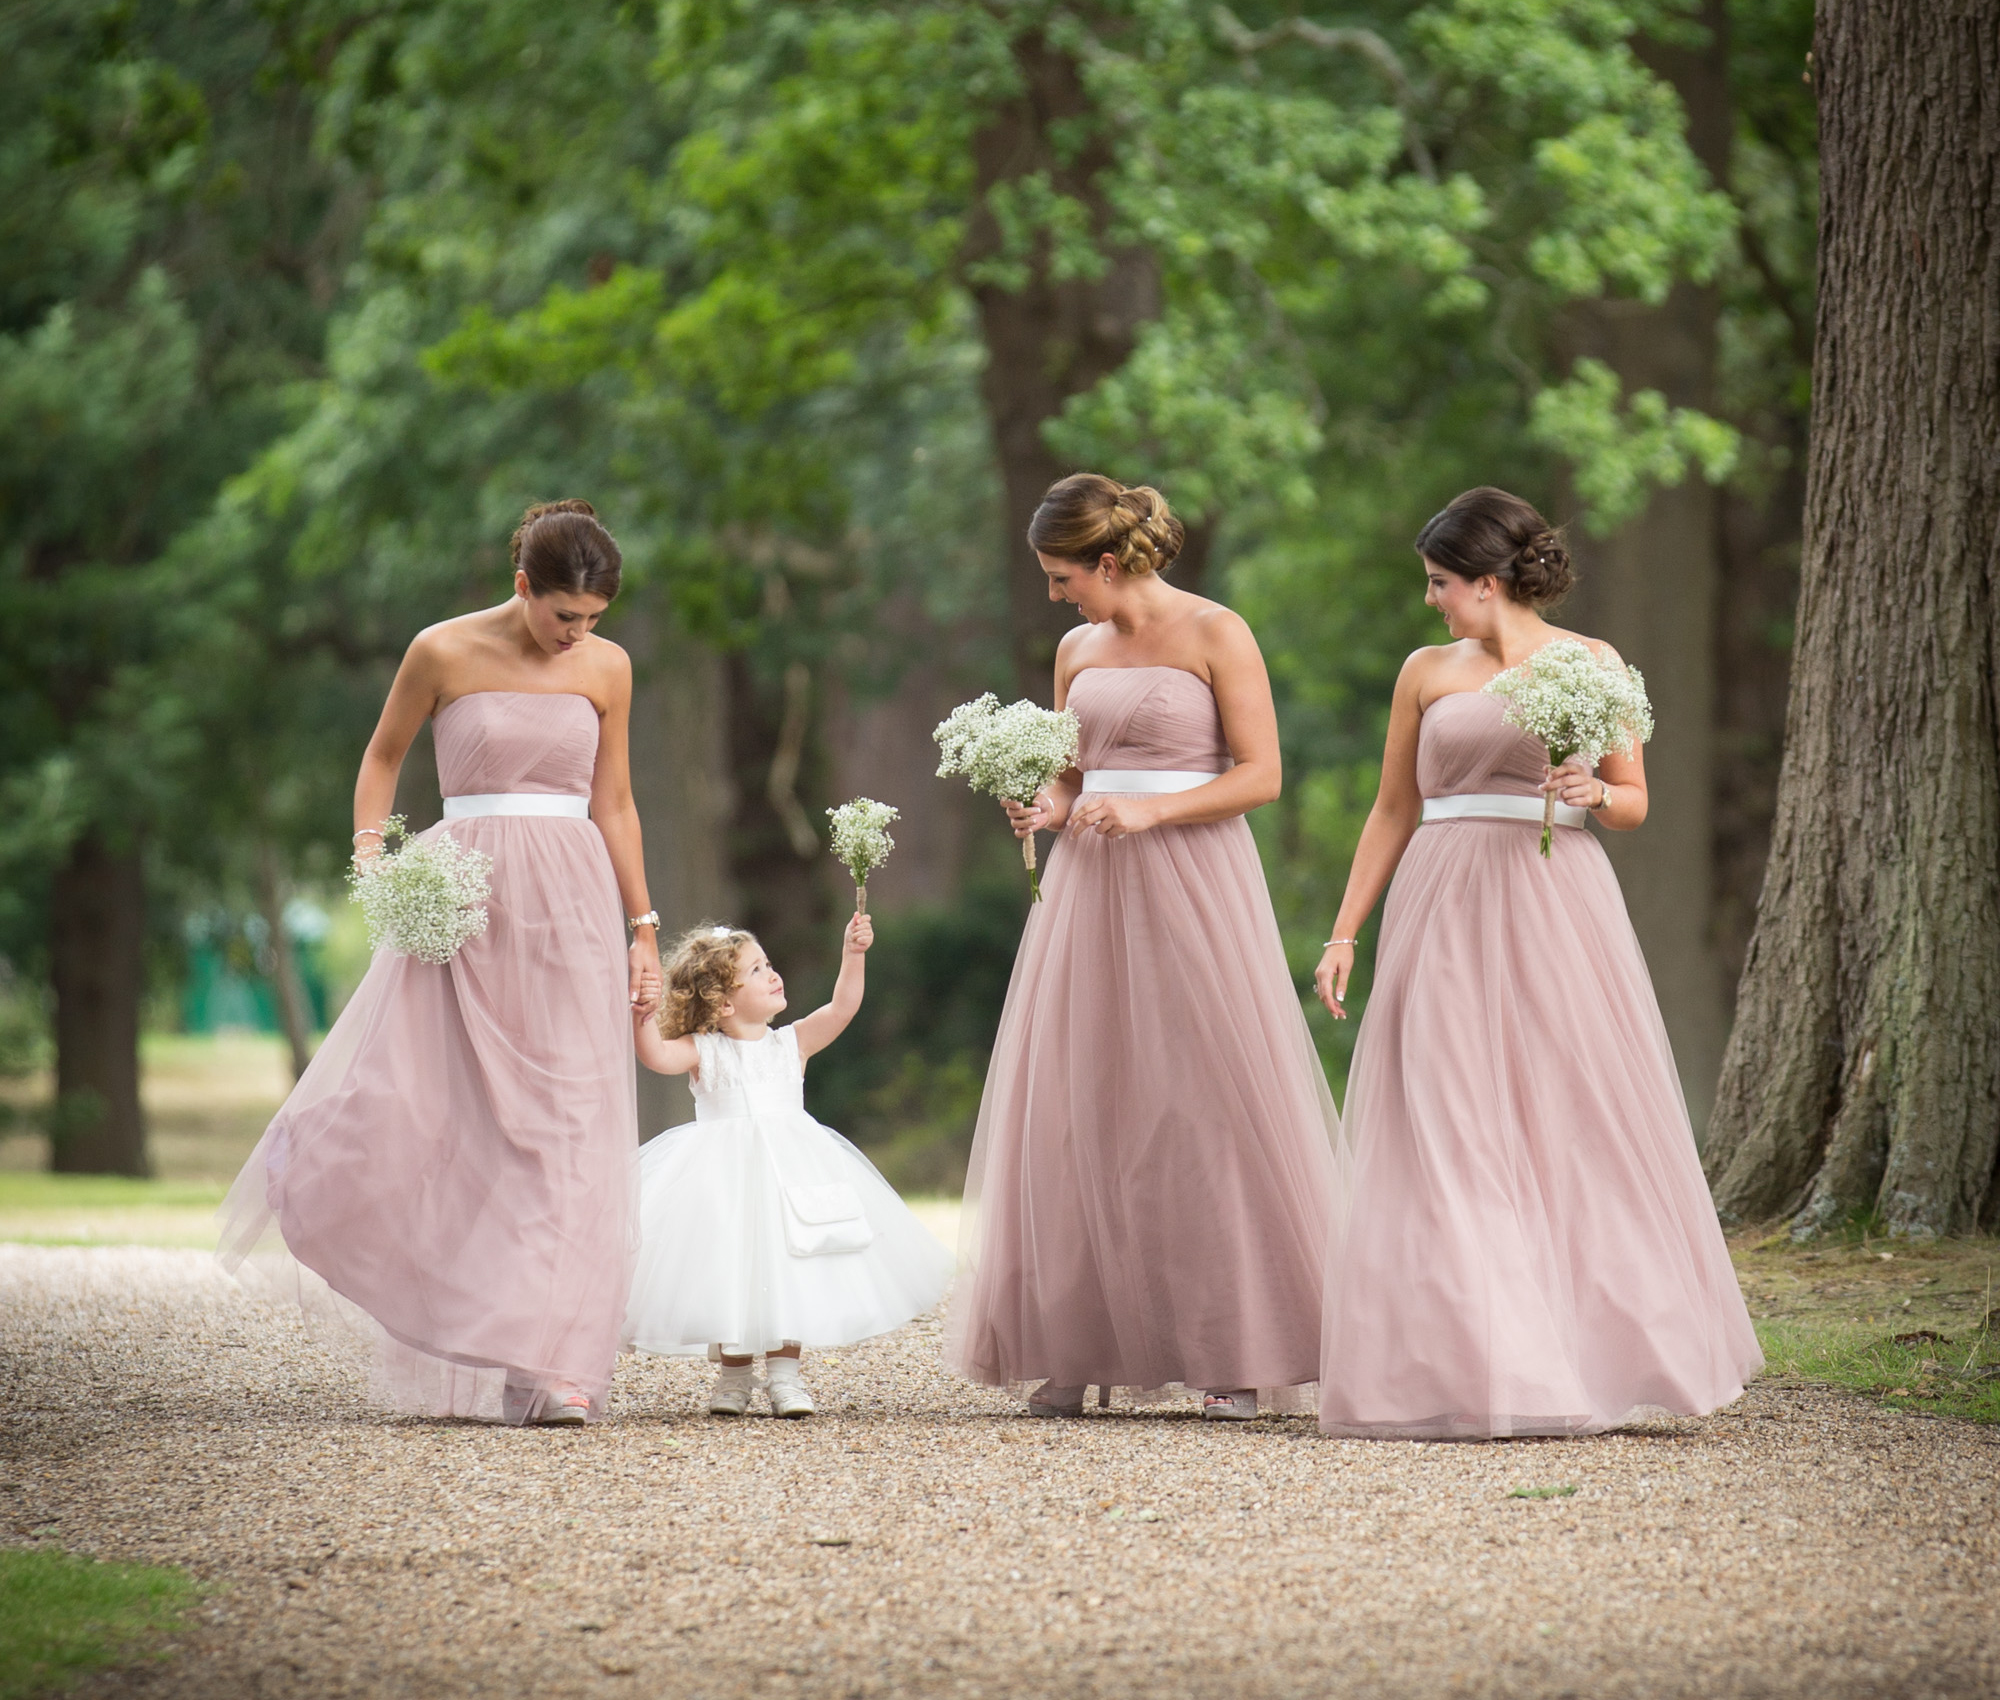 Wedding blog bamboozled by photography styles photographers help flower girl